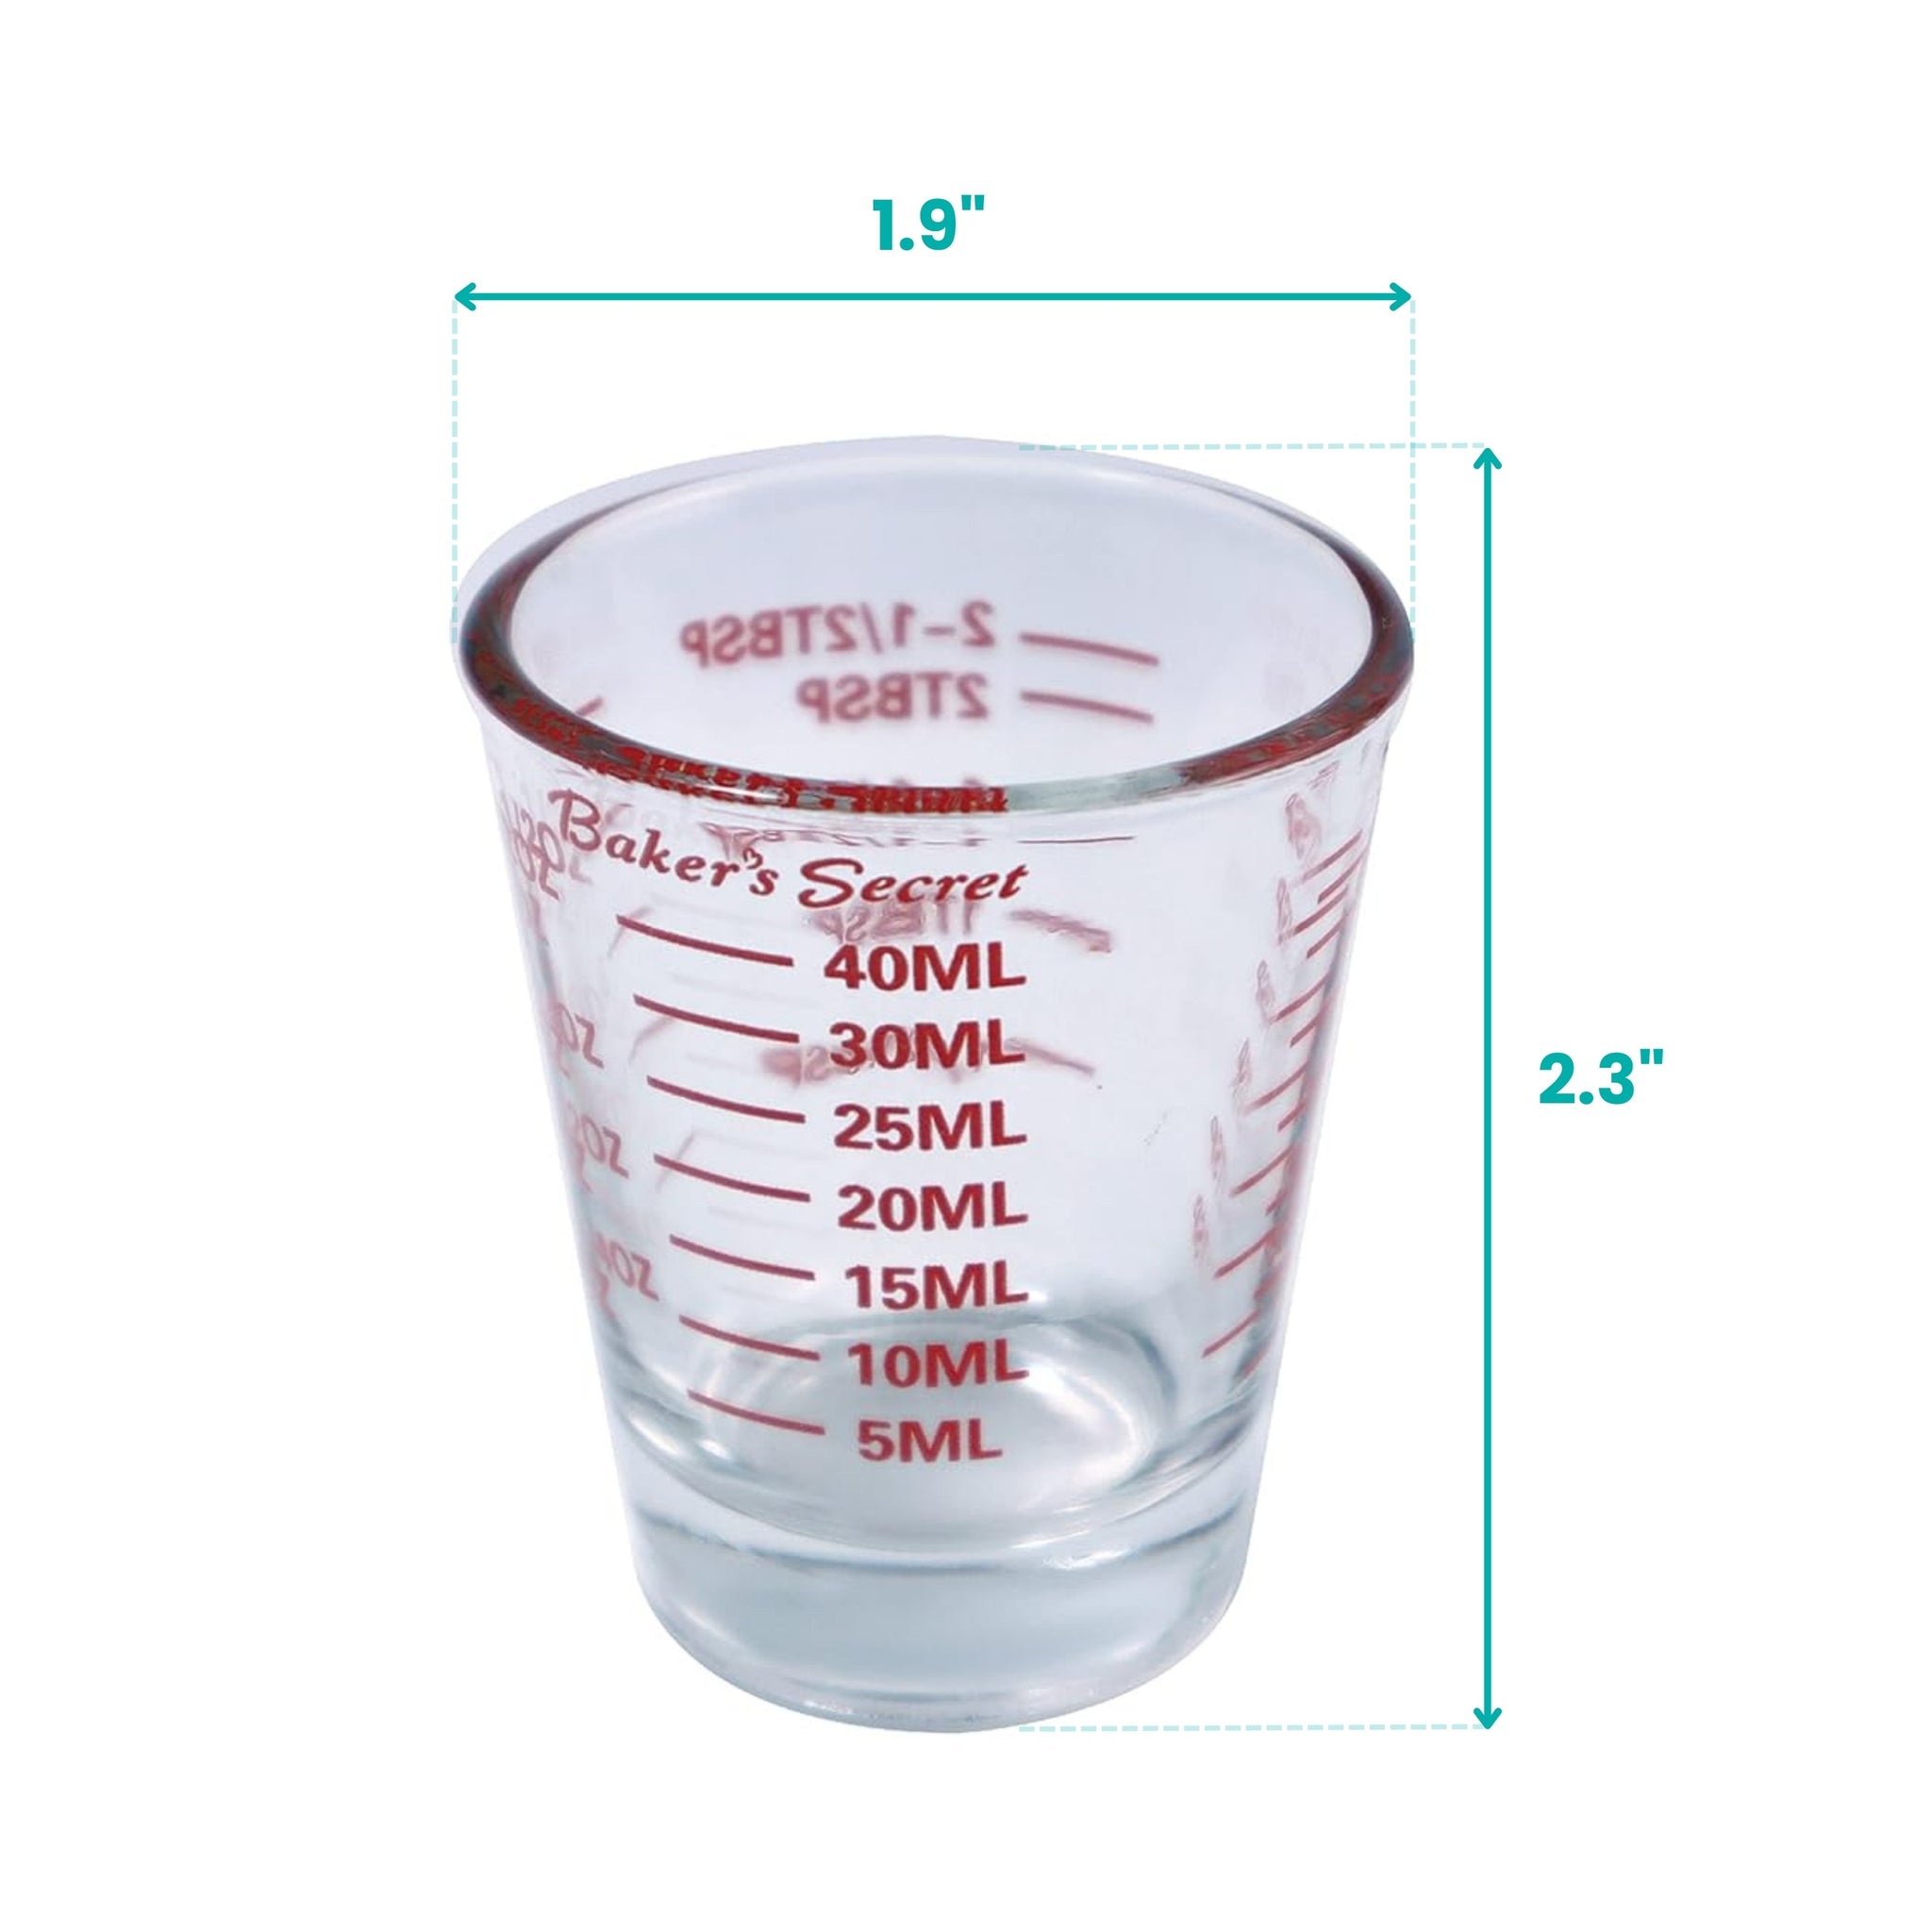 1.5oz Measuring Cup - Shot Glass  Cookware Accessories - Baker's Secret